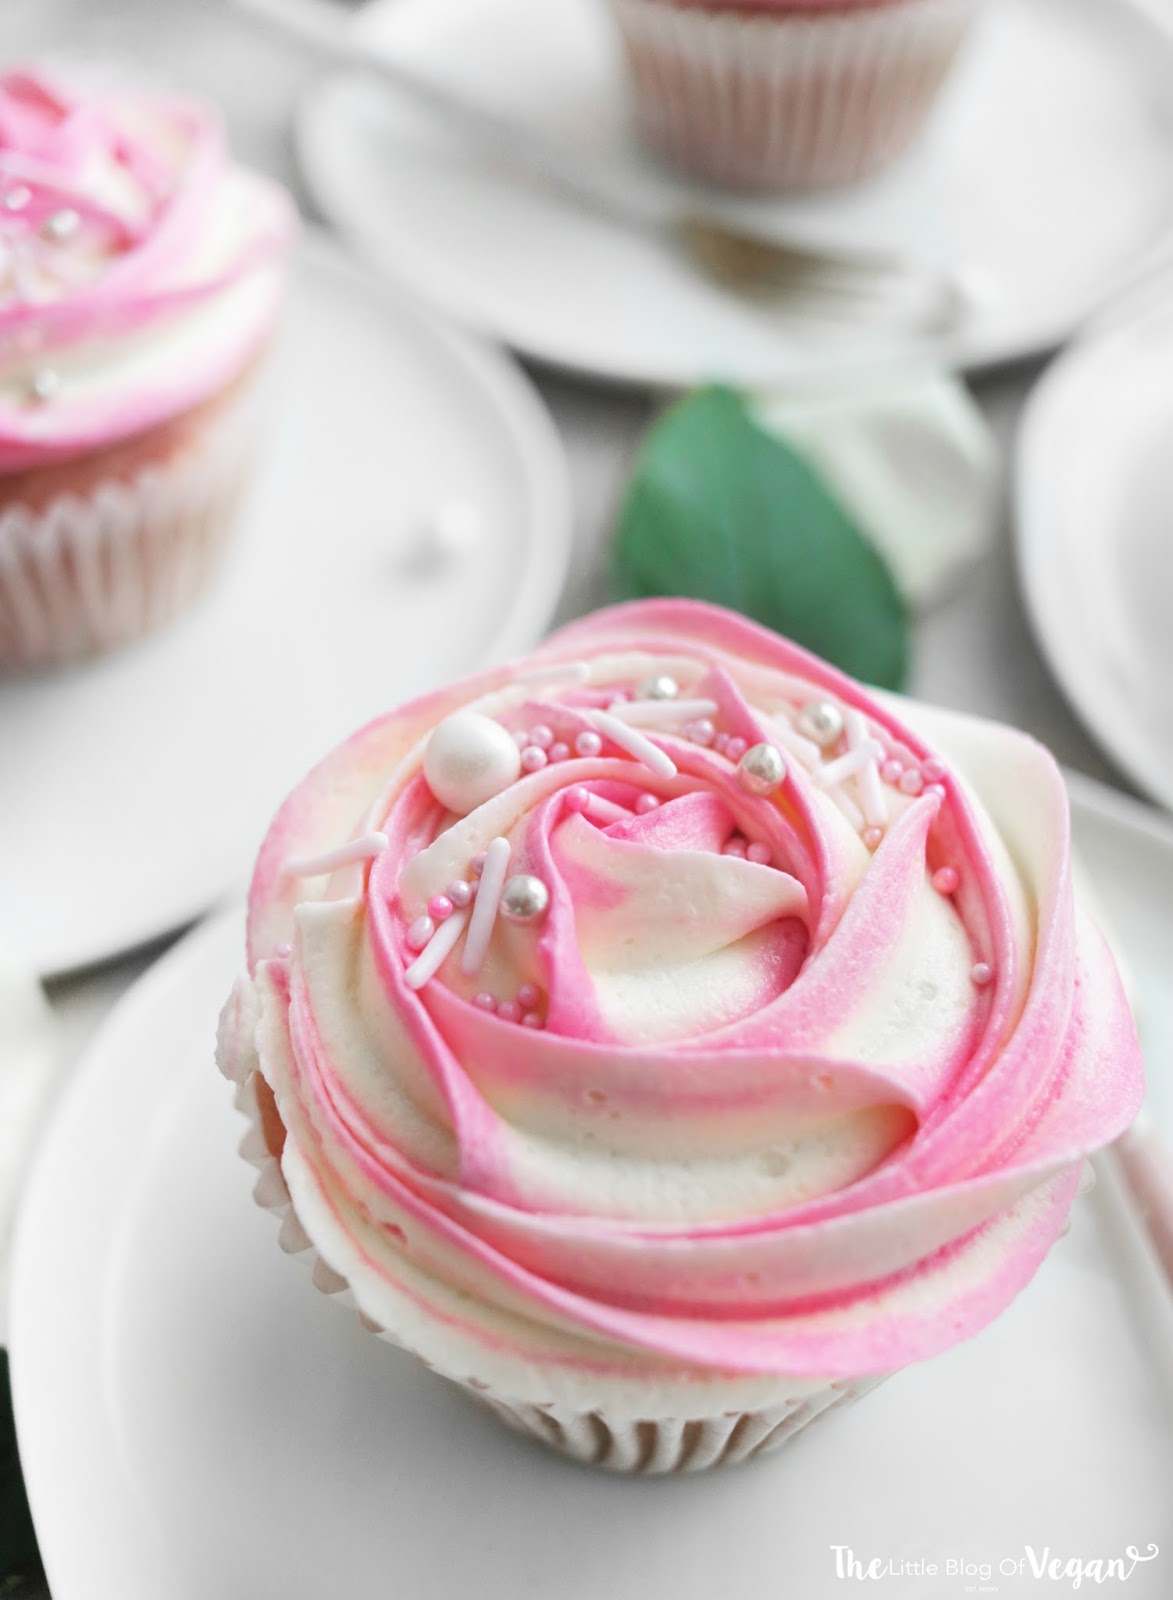 Rose cupcakes recipe | Ft Pacifica | The Little Blog Of Vegan